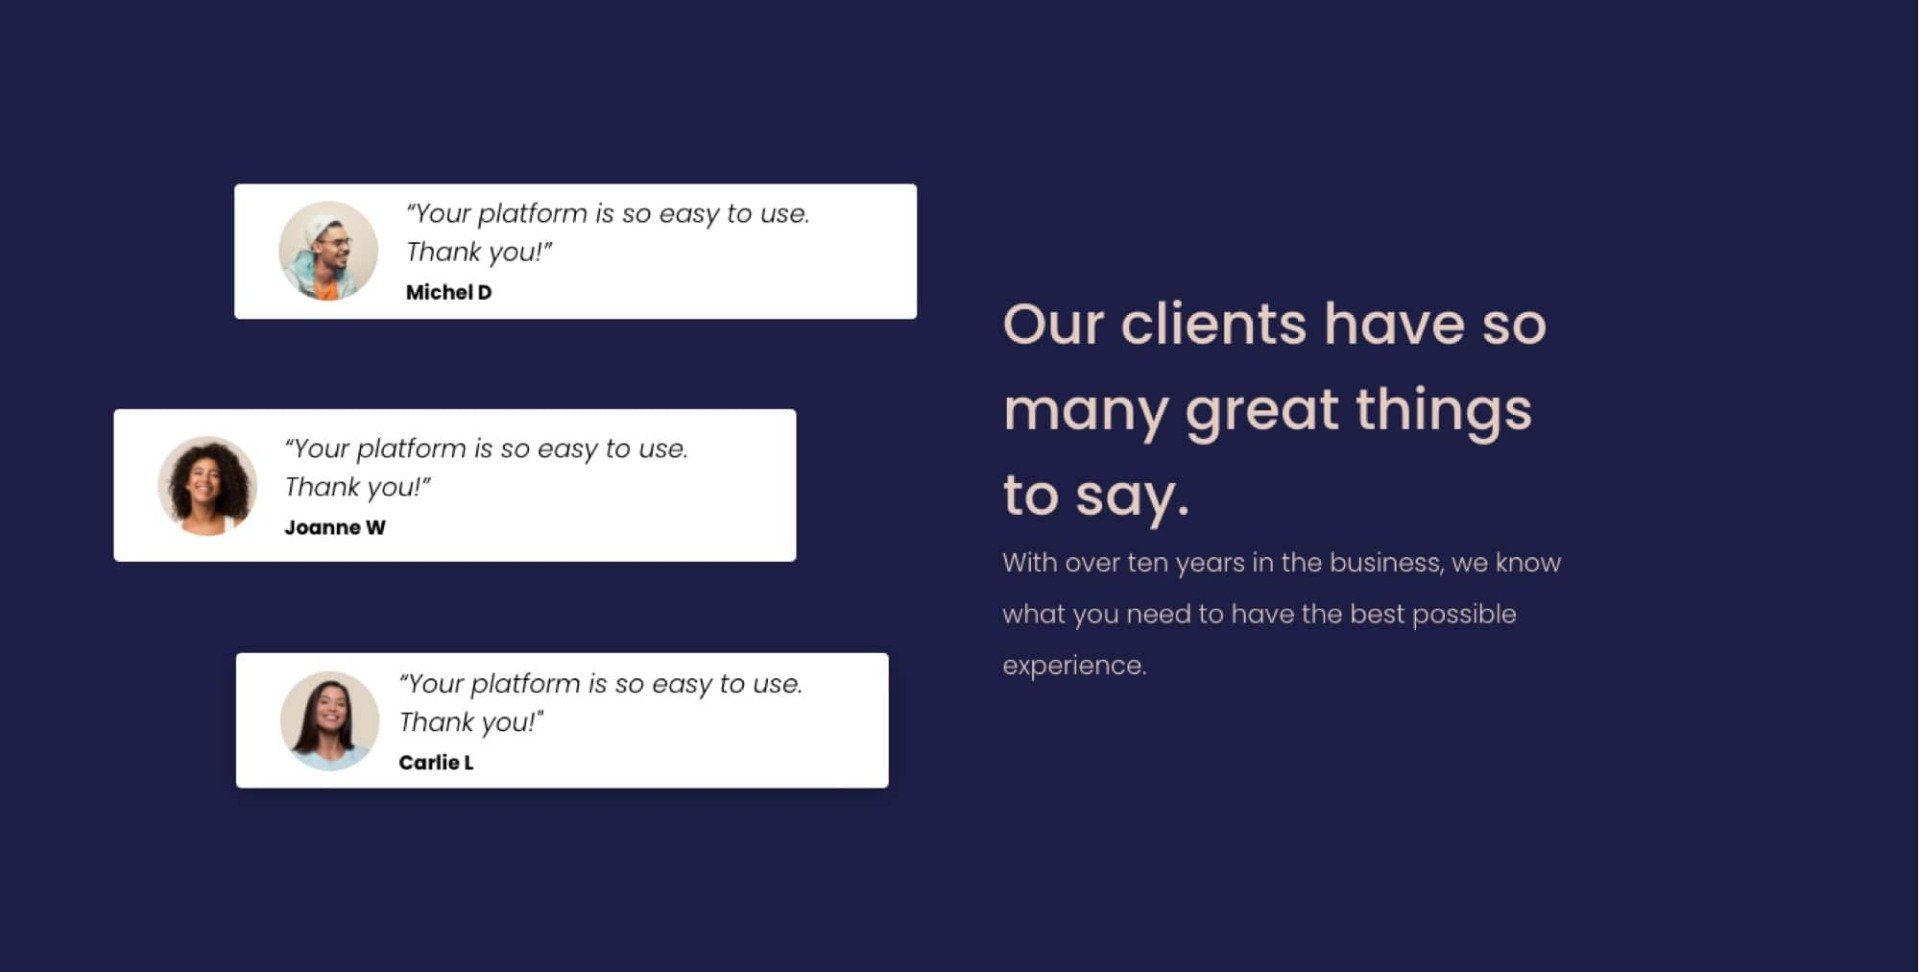 flexbox example of client testimonials